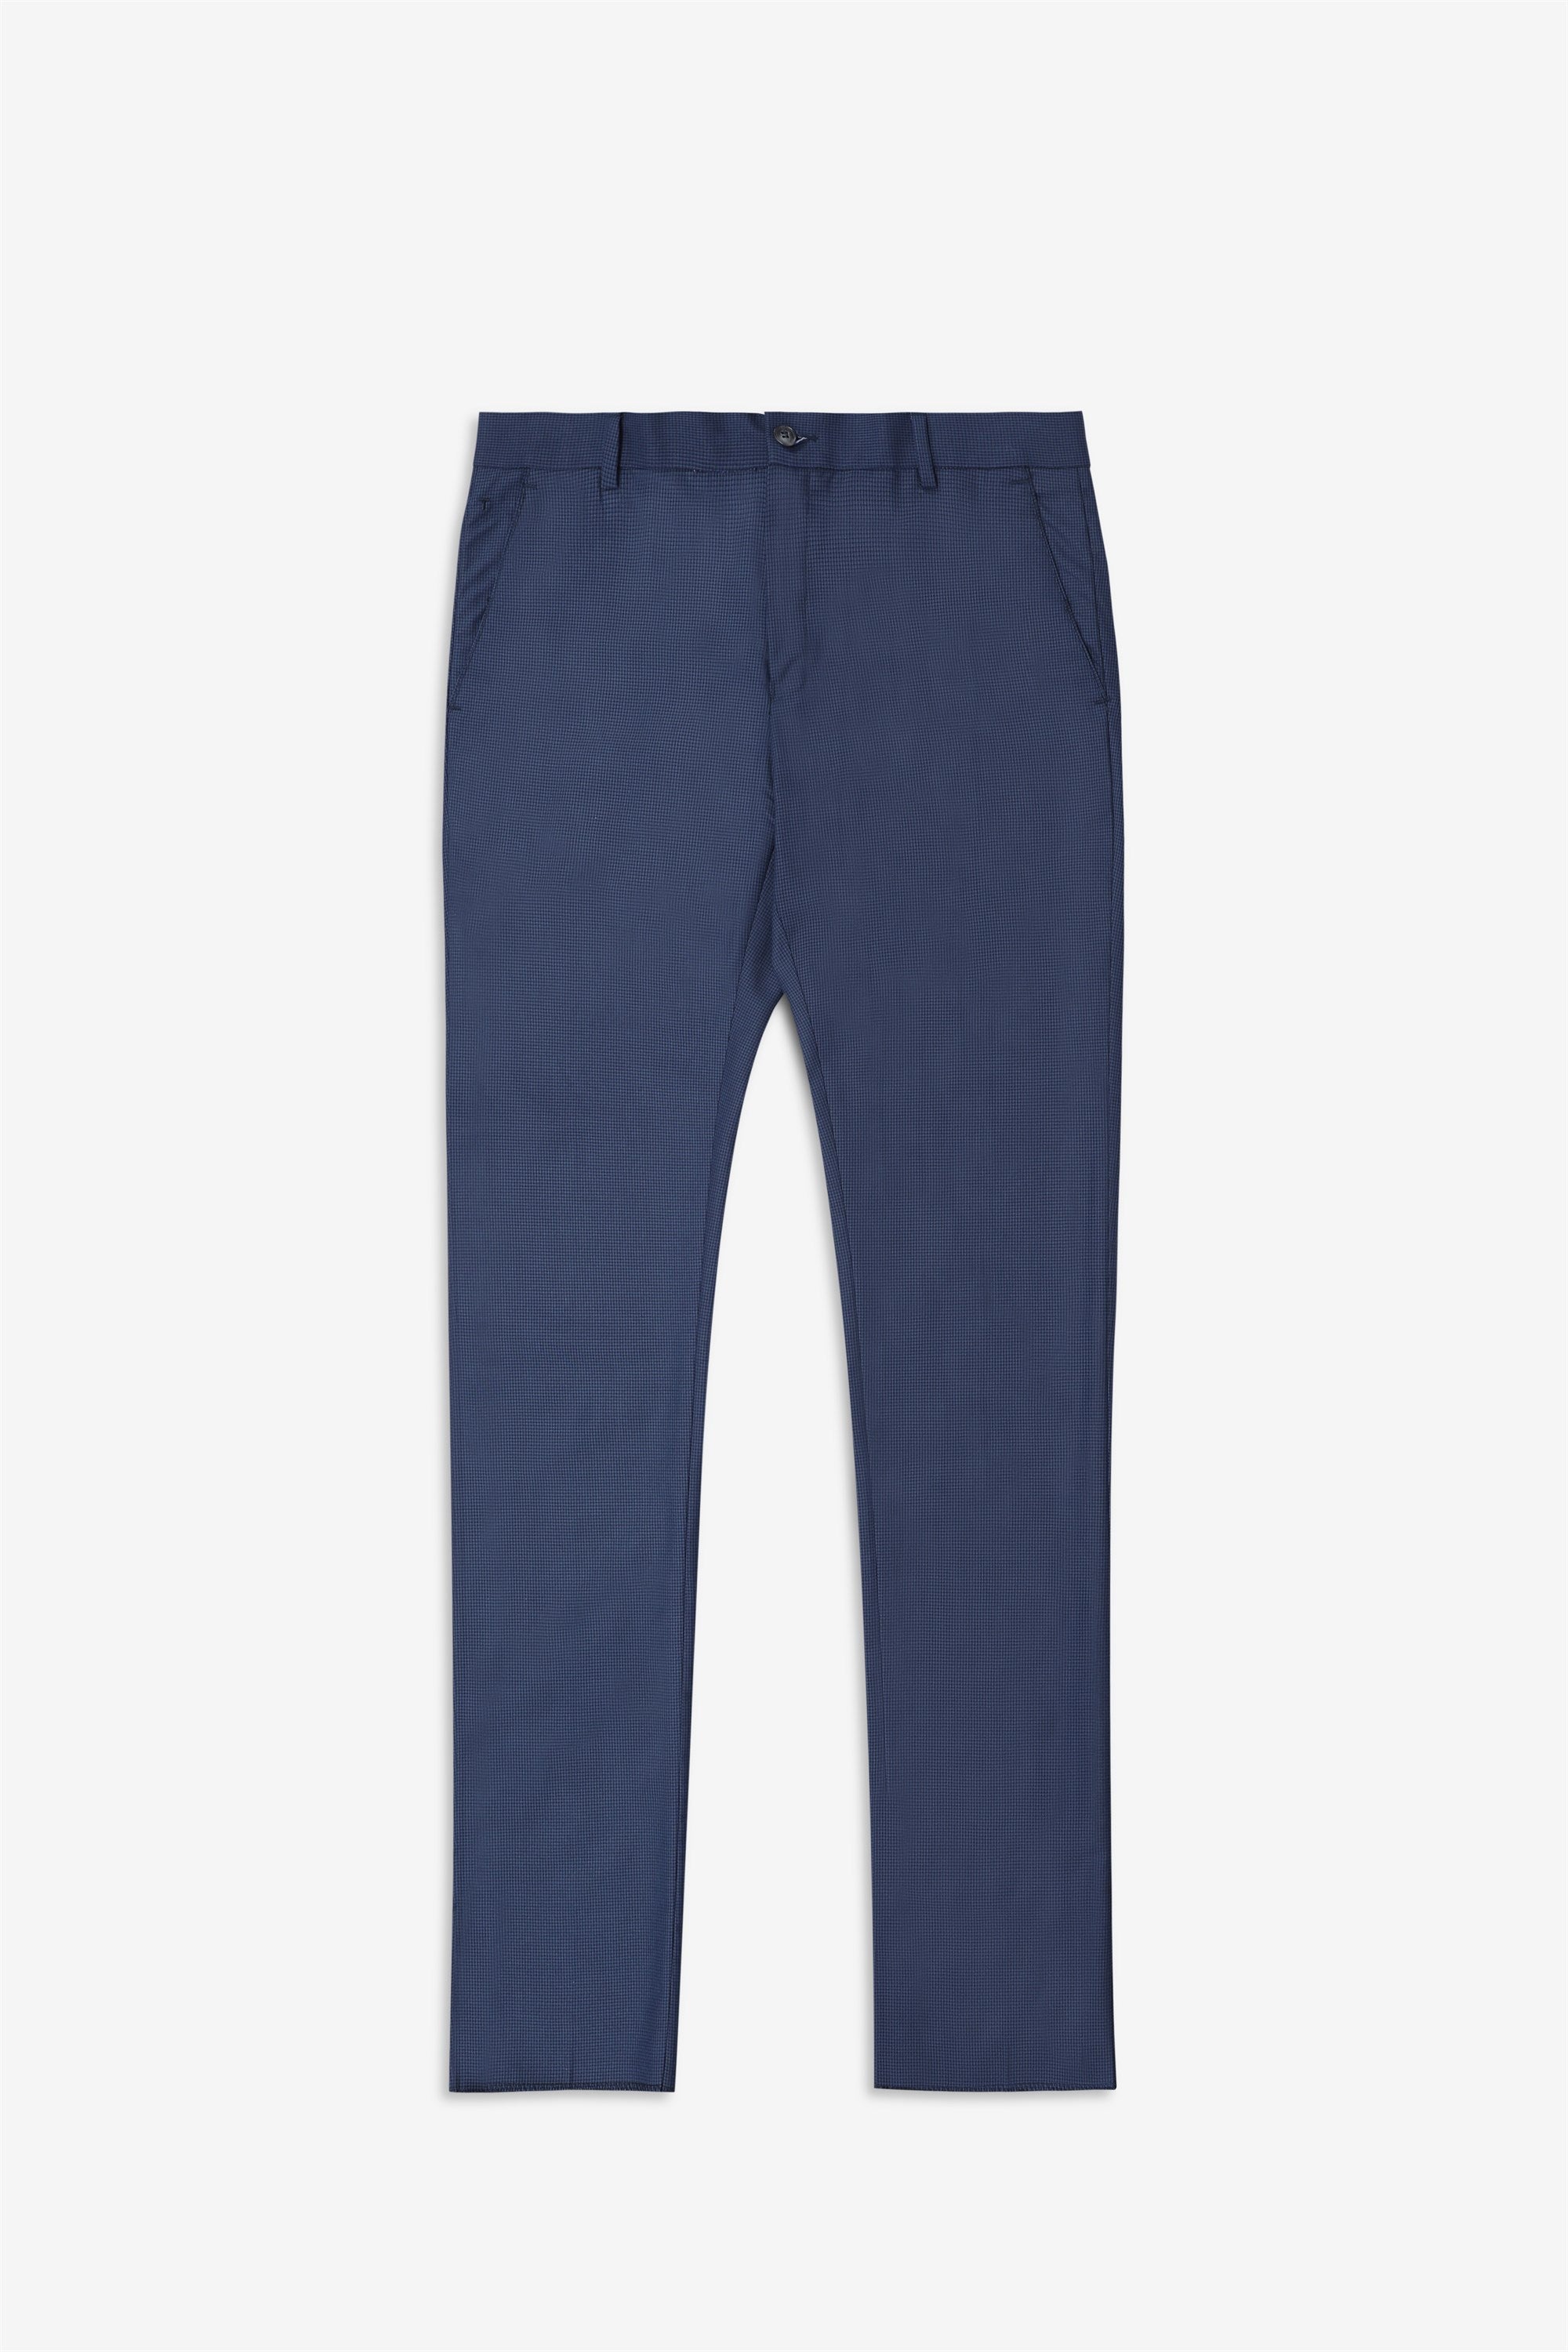 T the brand Men Formal Textured Trouser - Navy Blue